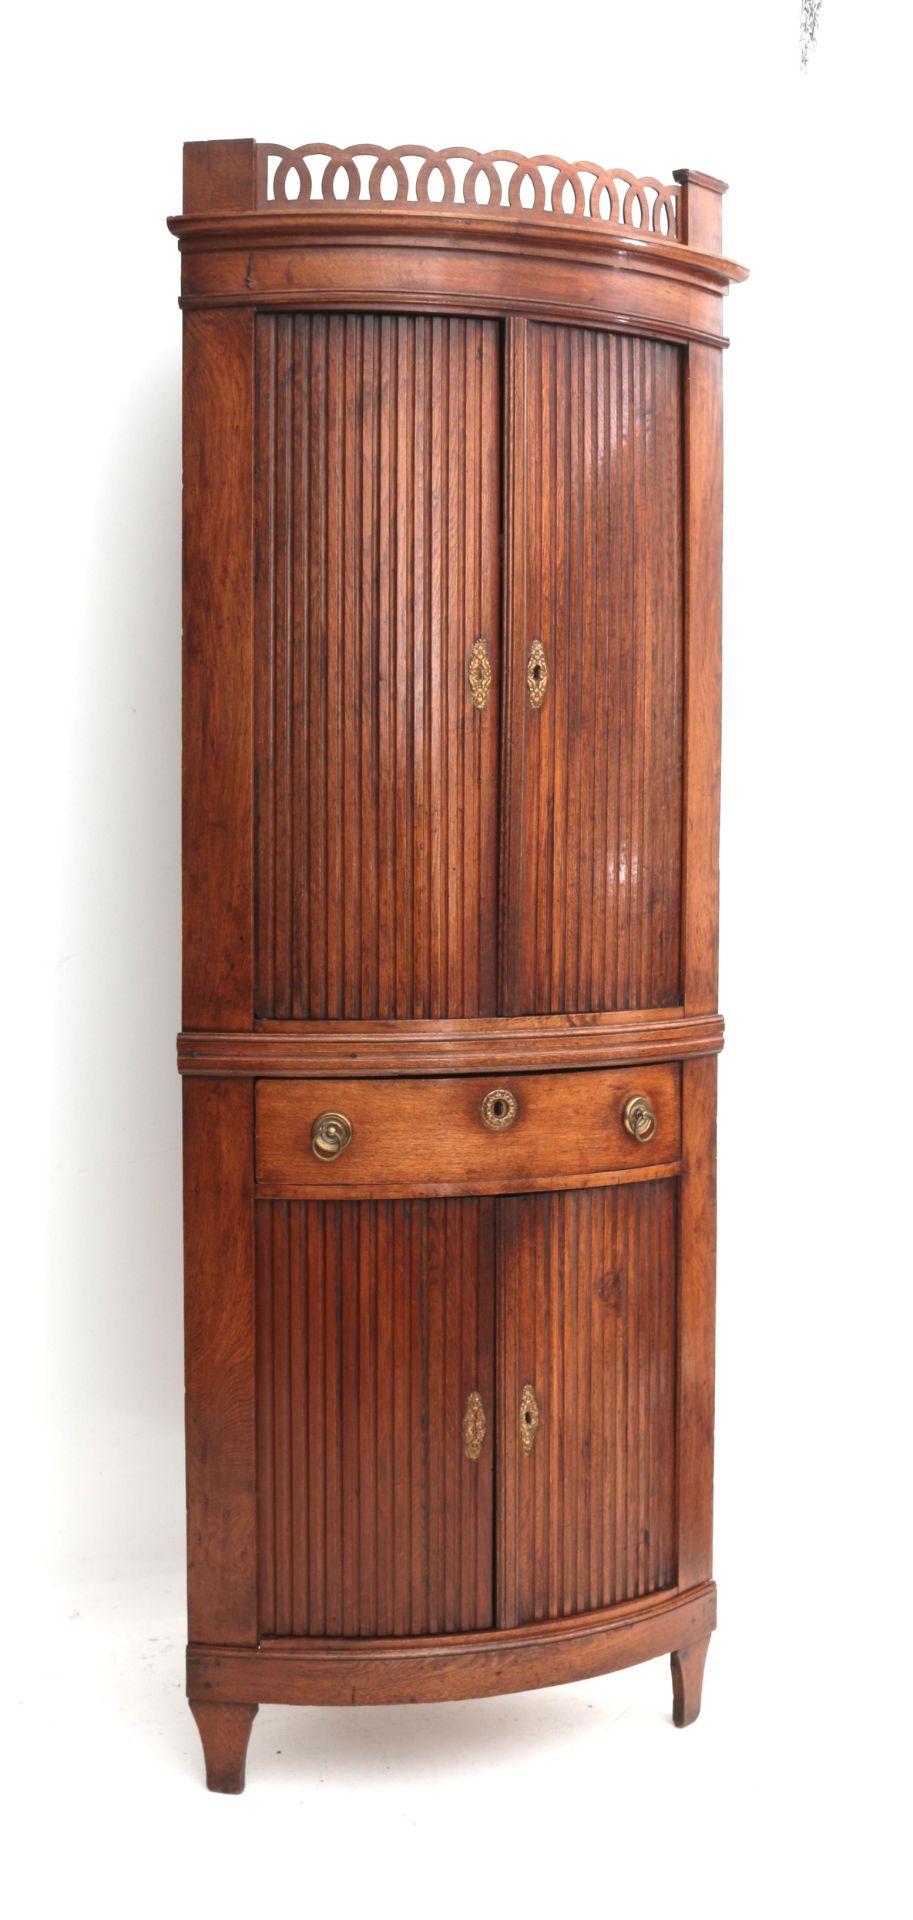 Dutch oak corner cabinet, last quarter 18th century.